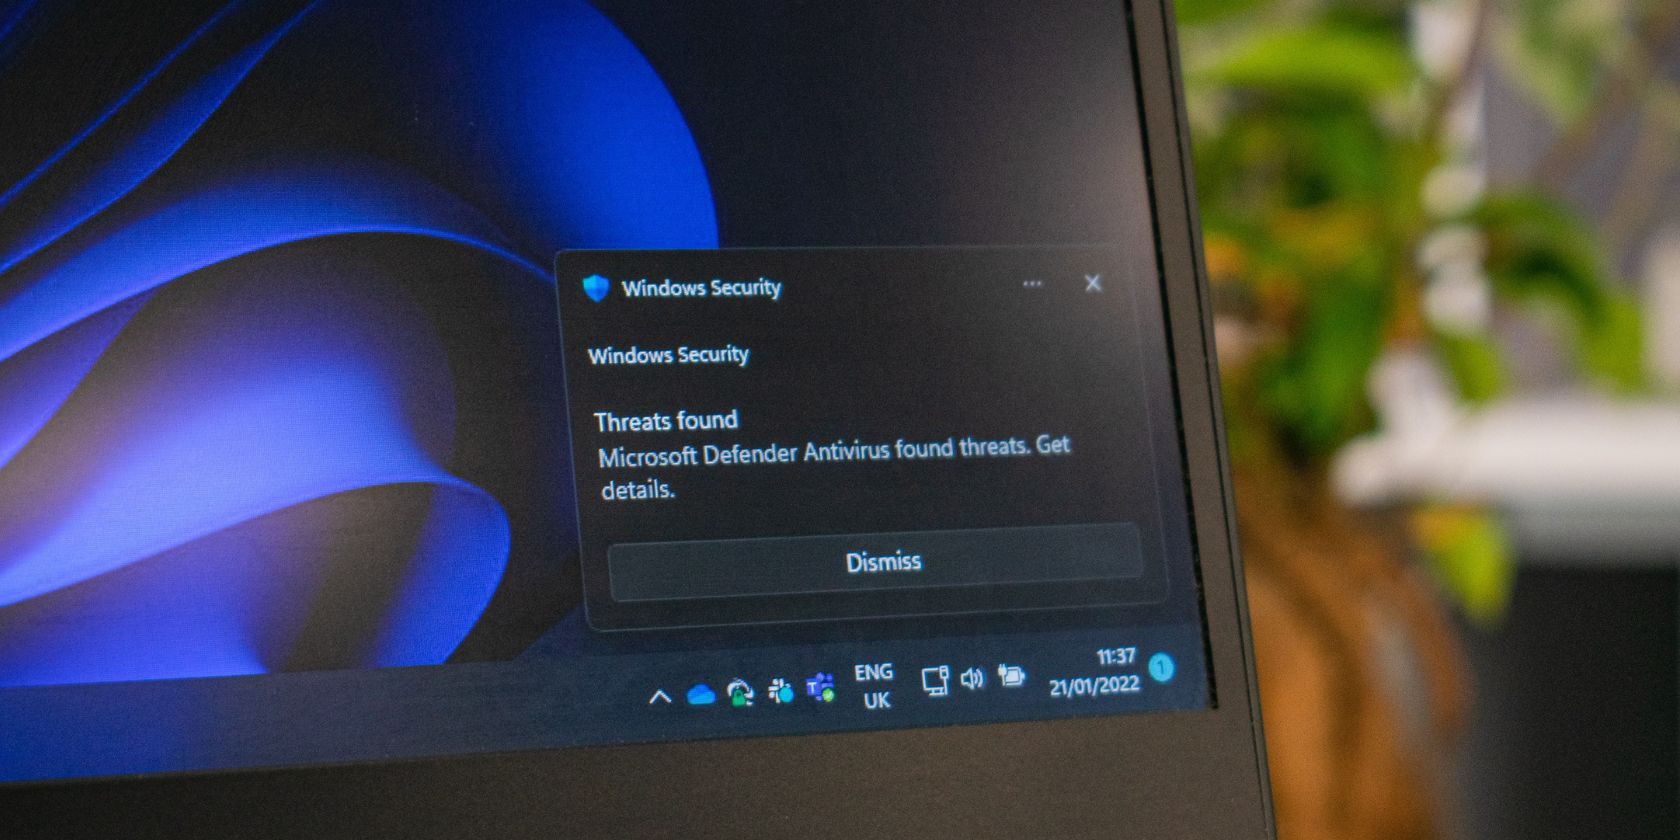 windows defender security notification on laptop screen